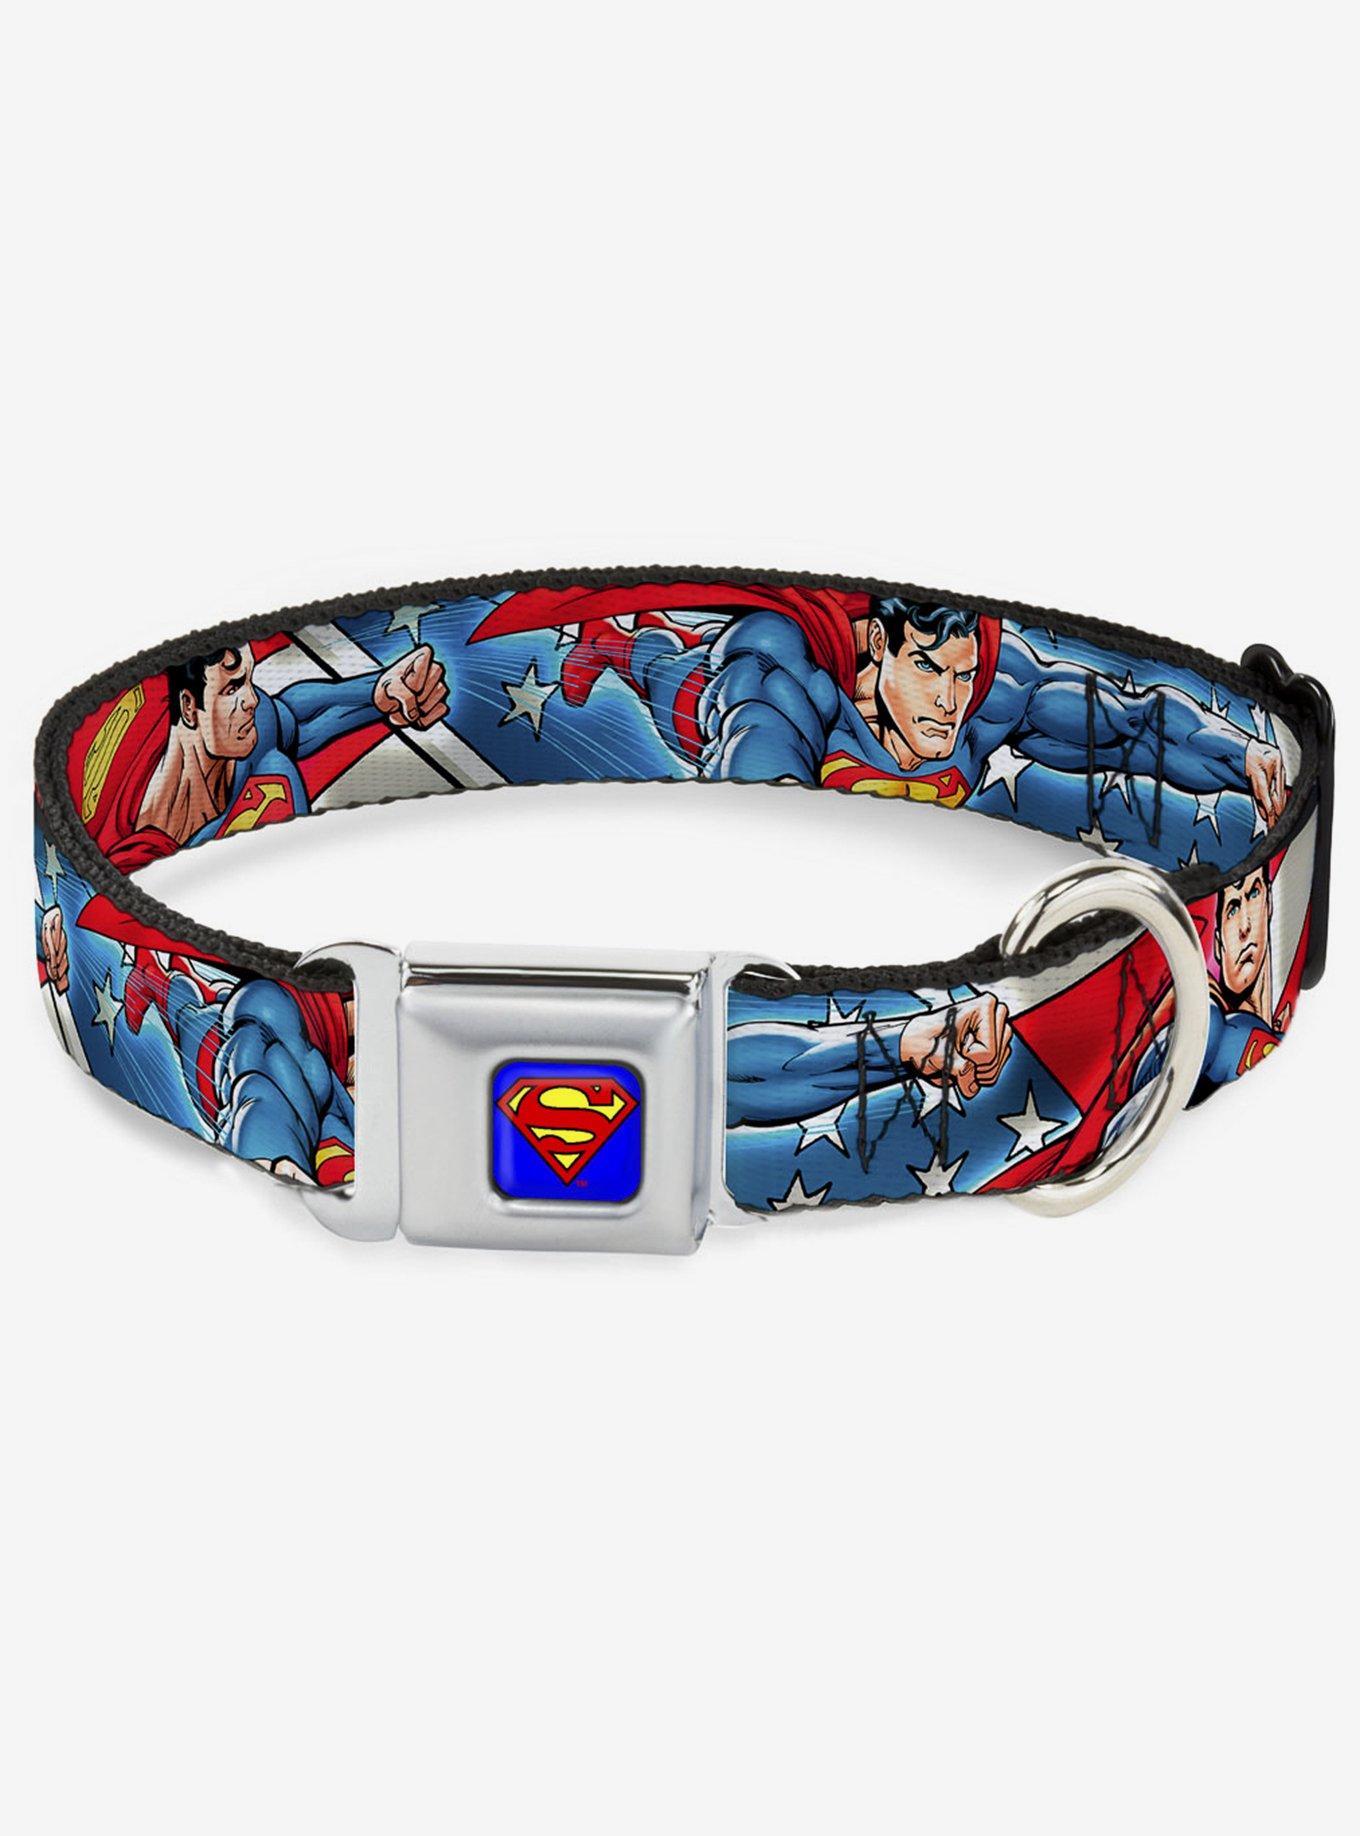 DC Comics Justice League Superman Action Poses Stars Stripes Seatbelt Buckle Dog Collar, MULTICOLOR, hi-res